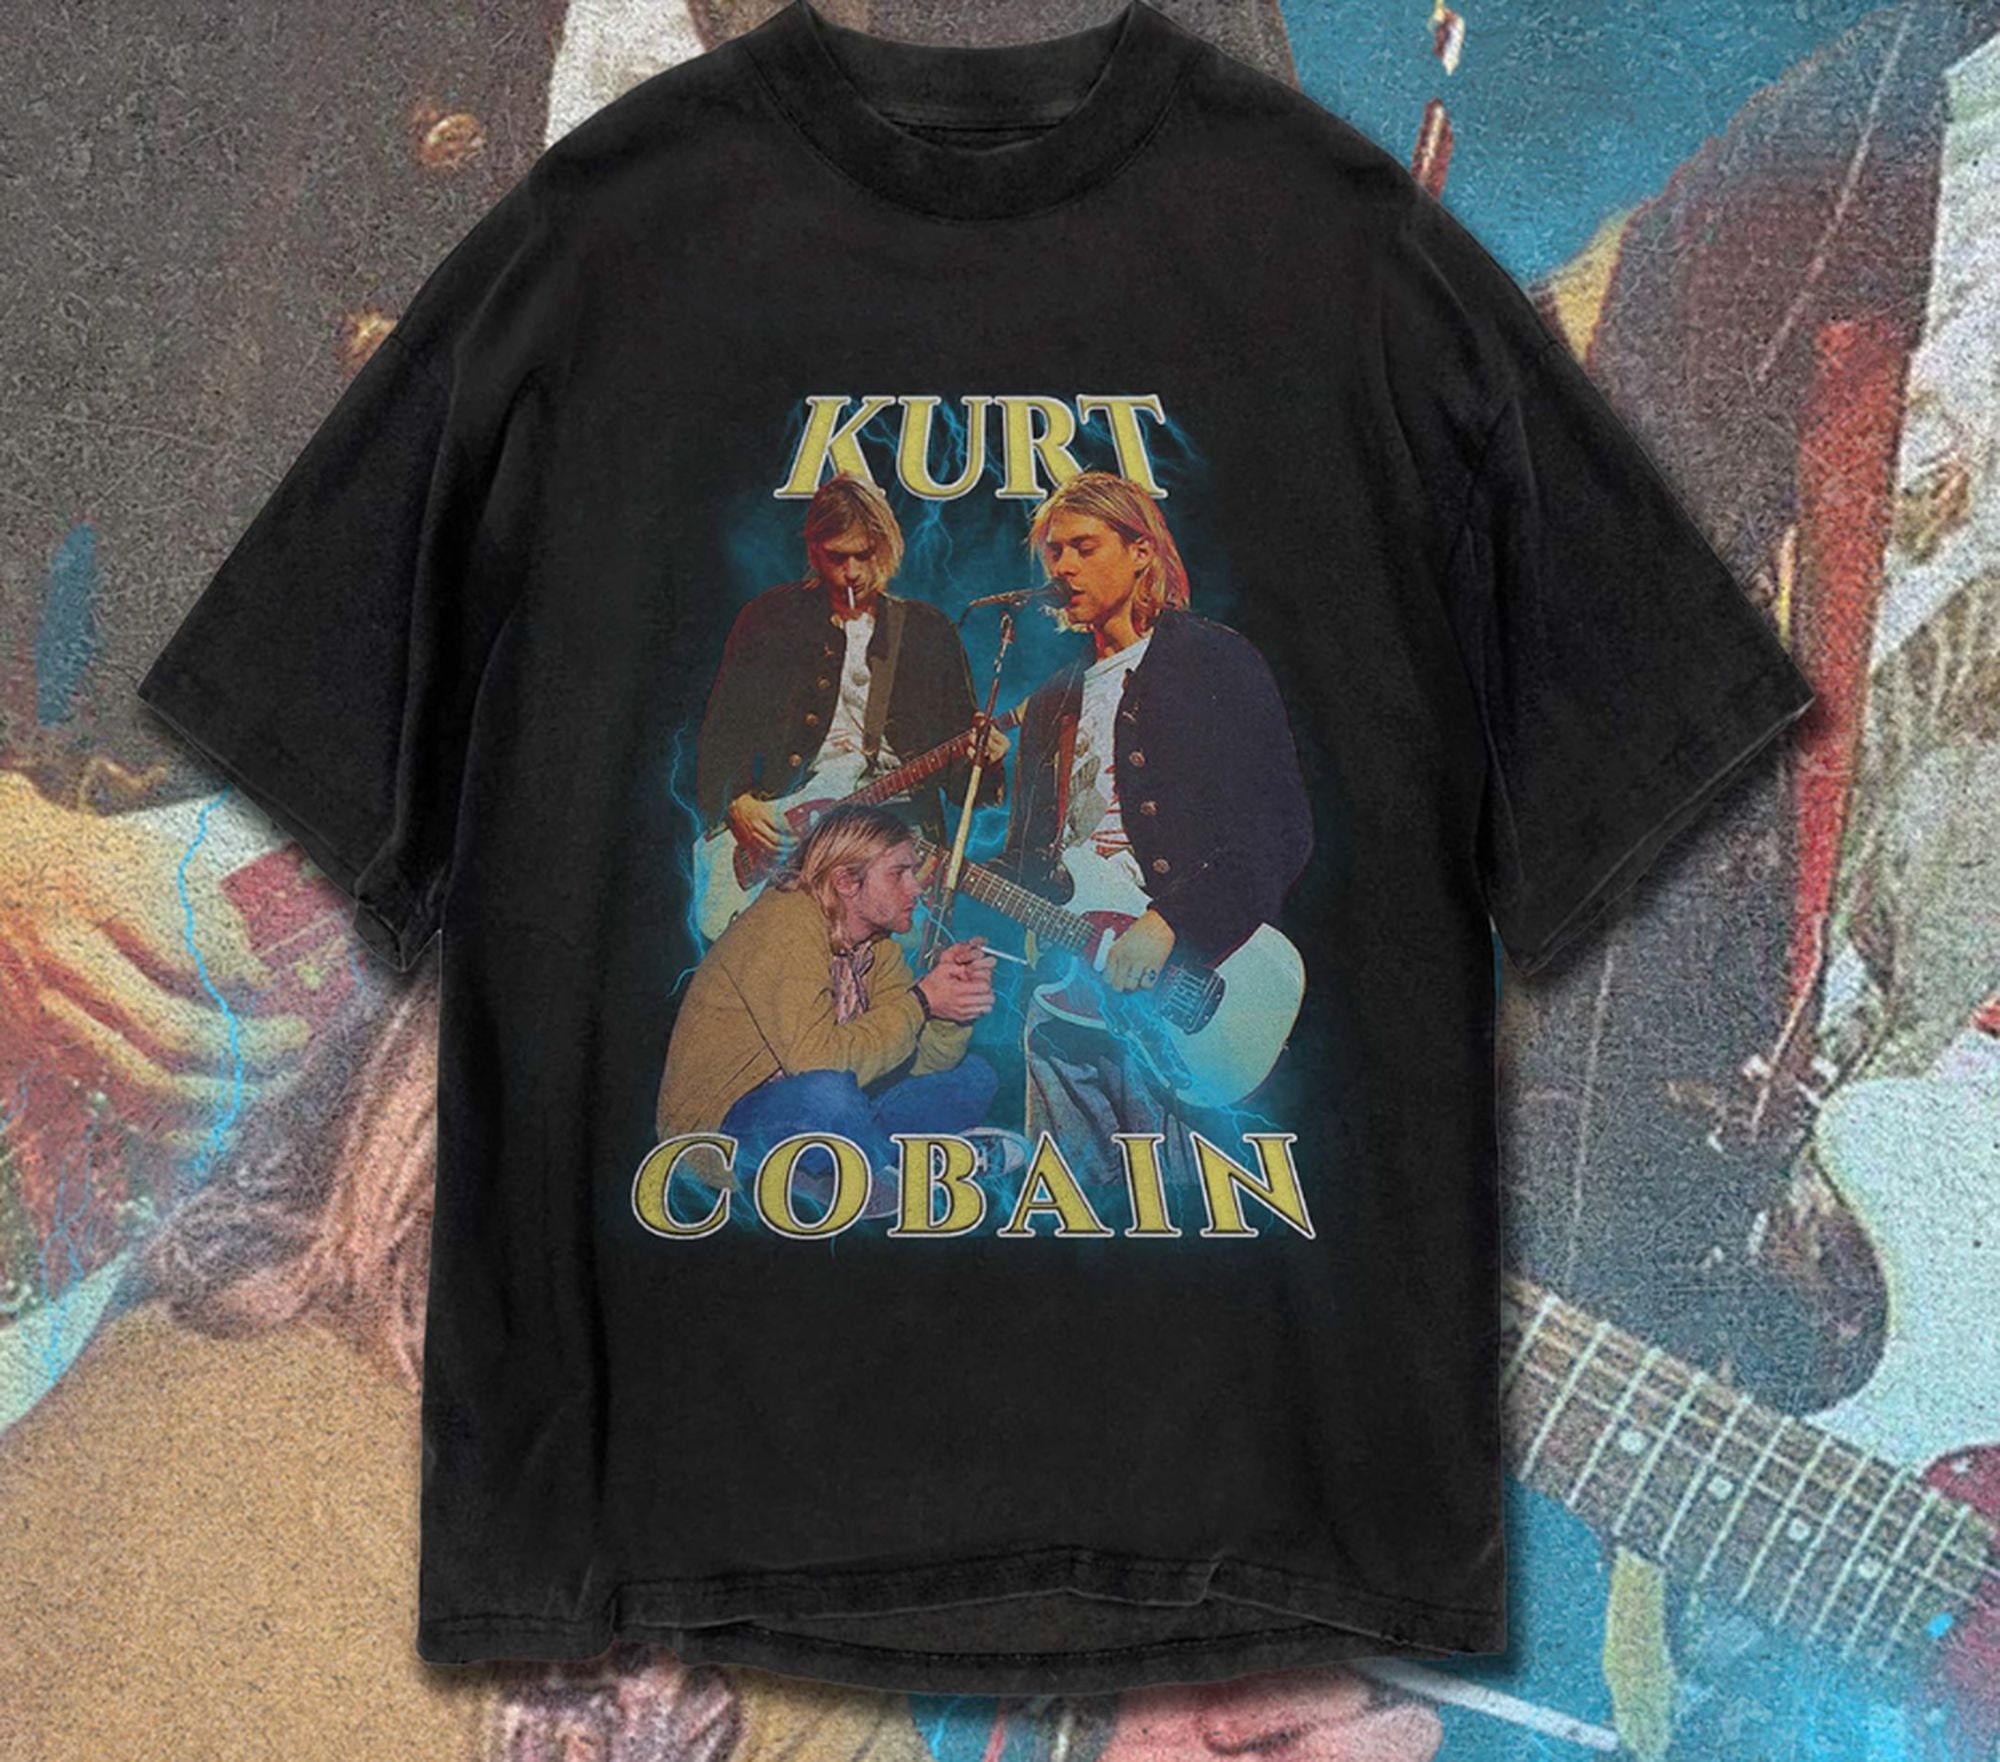 Discover Maglietta T-Shirt Kurt Cobain Nirvana Per Uomo Donna Bambini - Rock Band Guitar Punk Heavy Metal